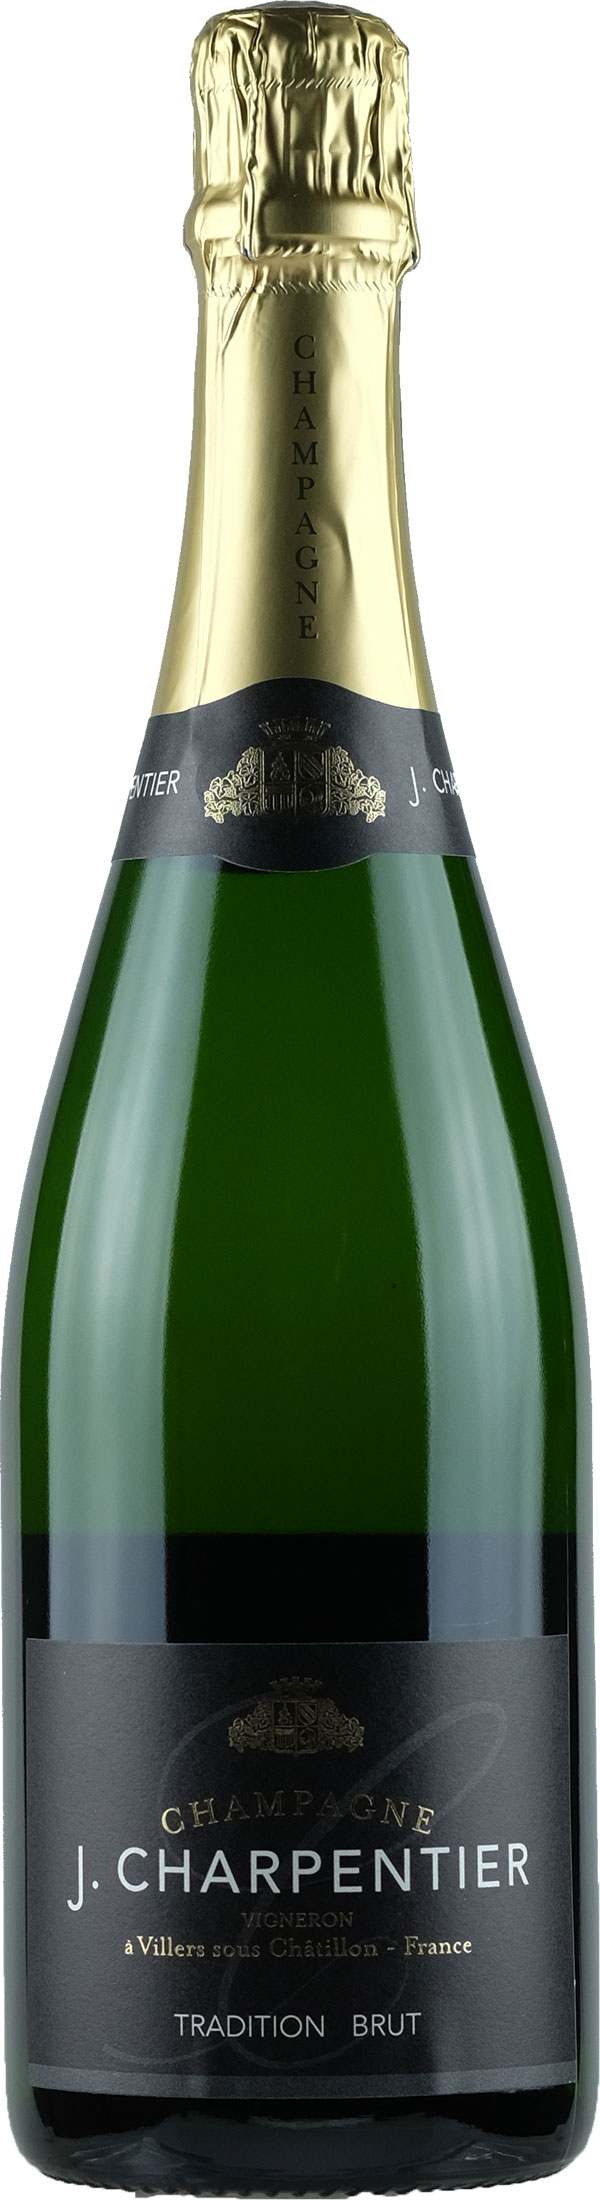 J. Charpentier Champagne Tradition Brut